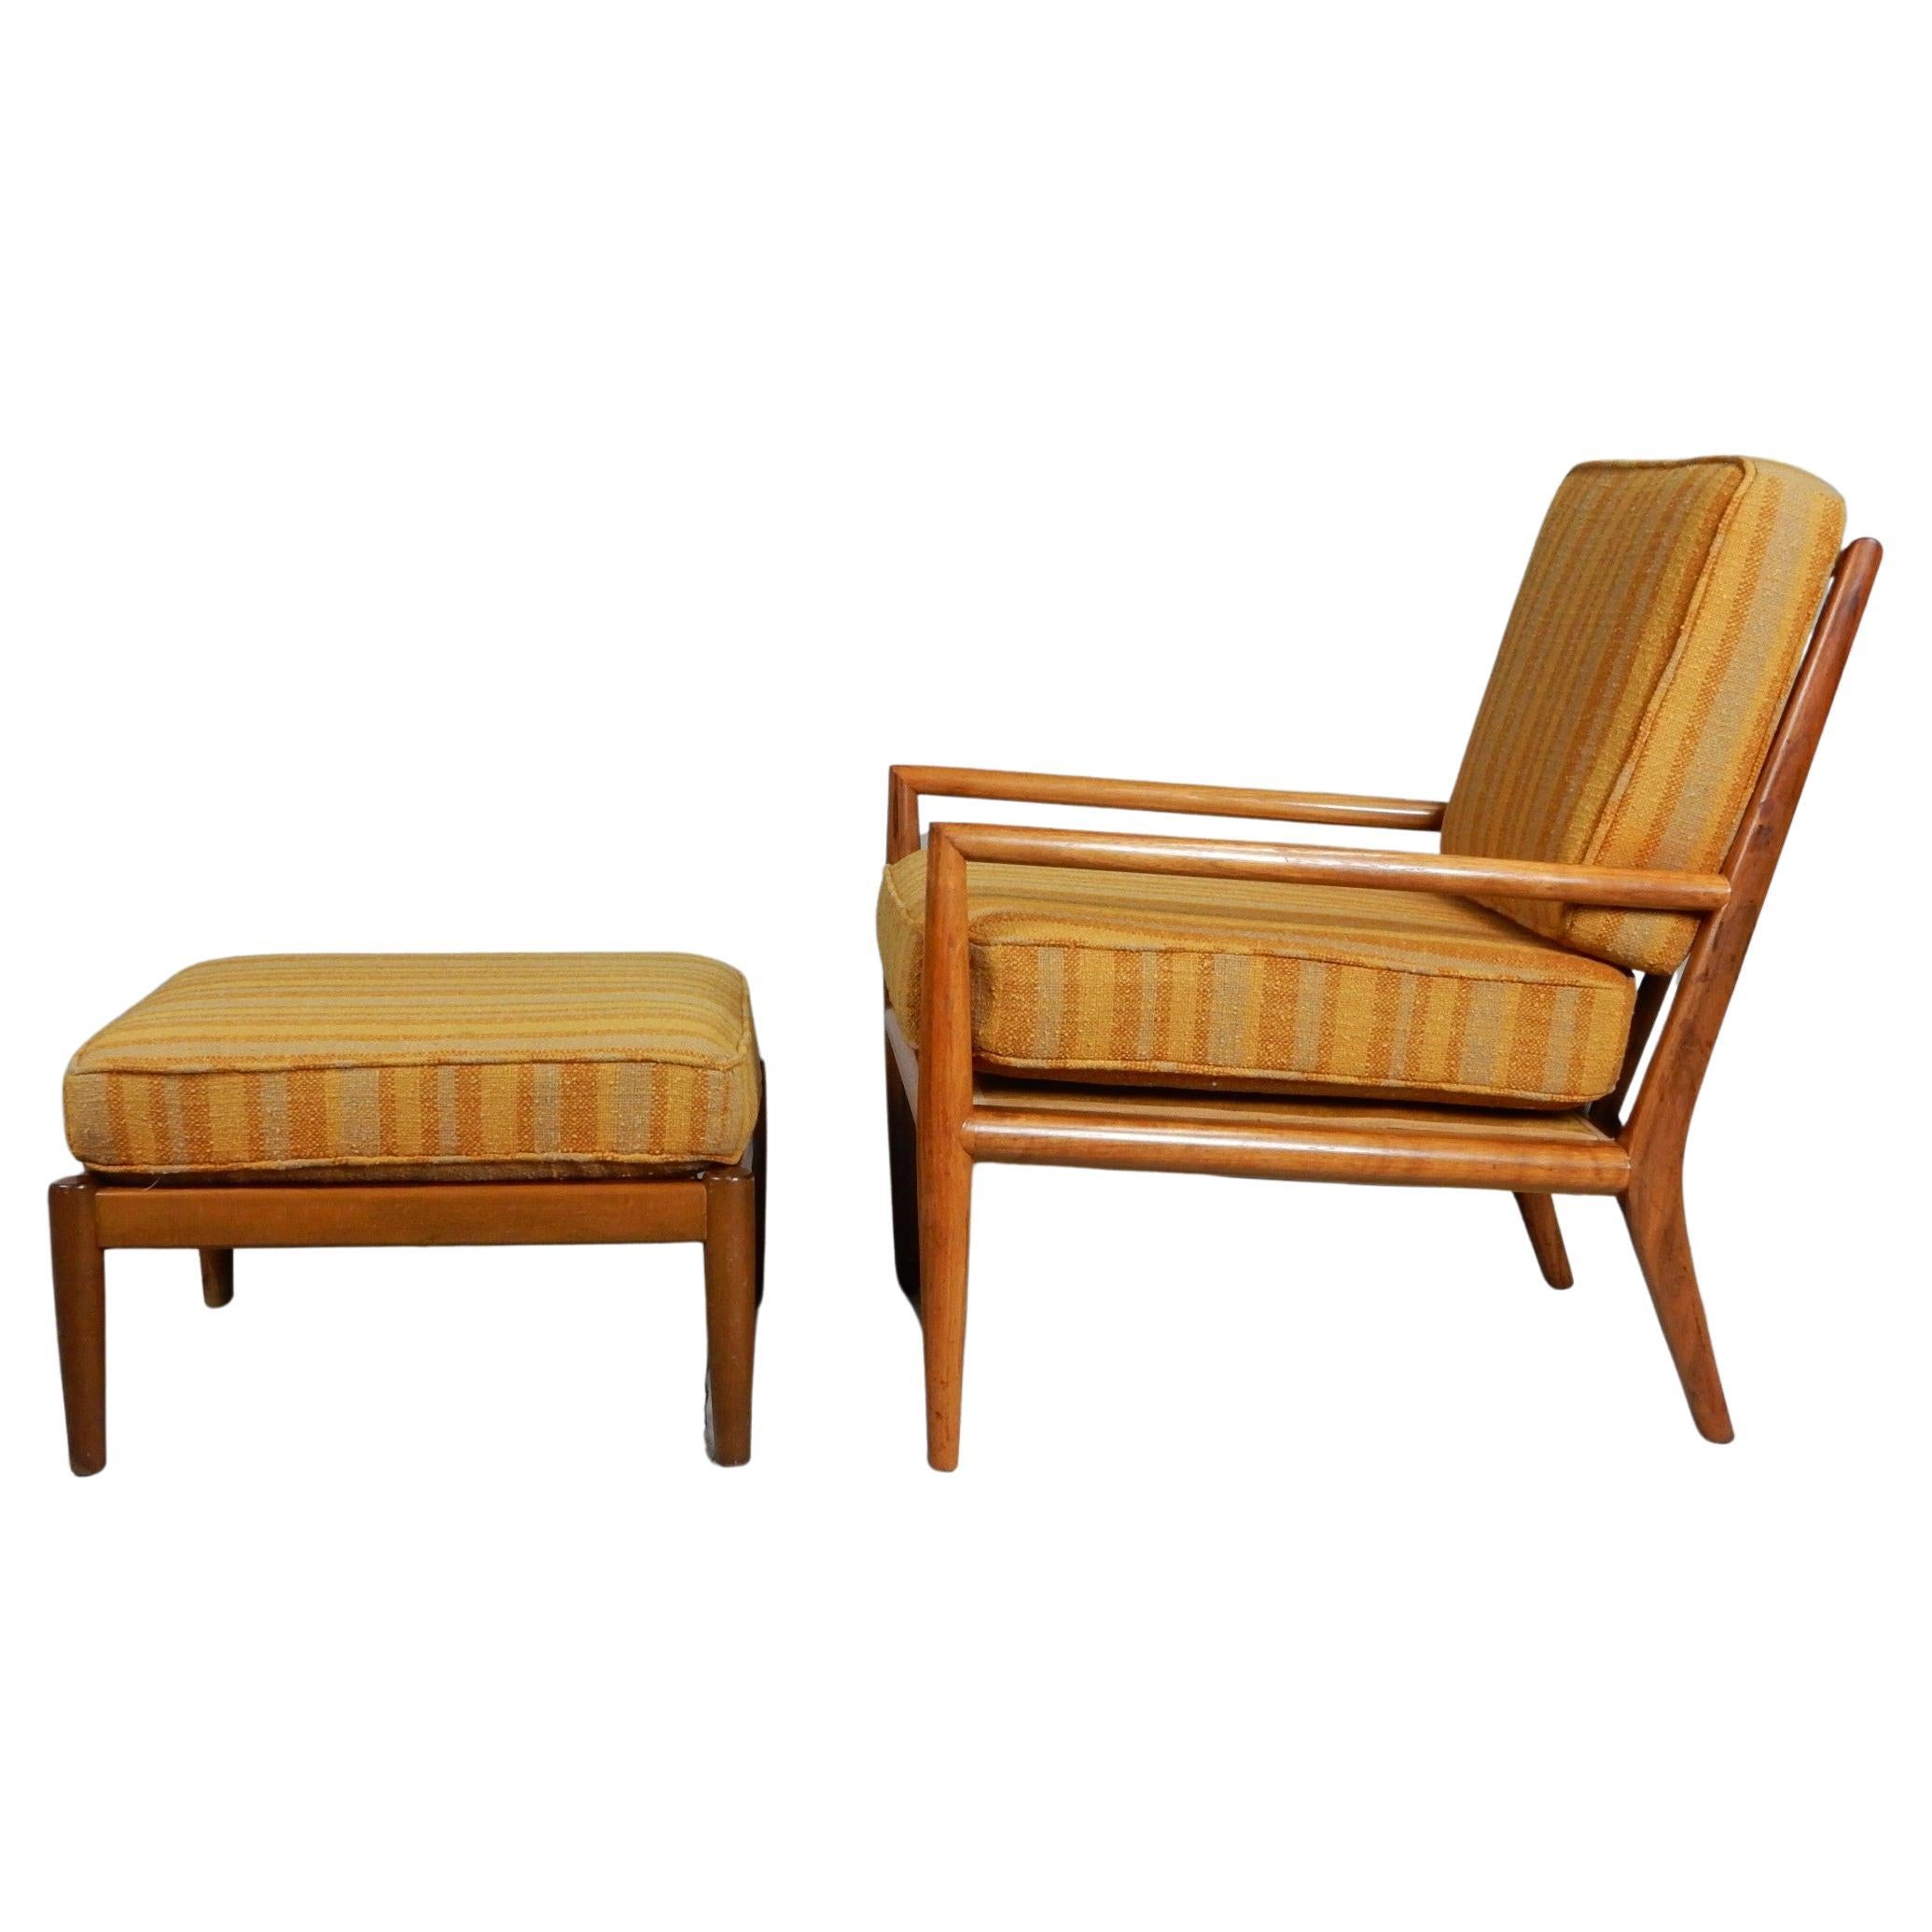 Mid-Century Modern T.H. Robsjohn-Gibbings Lounge Chair & Ottoman by Widdicomb 1950's For Sale